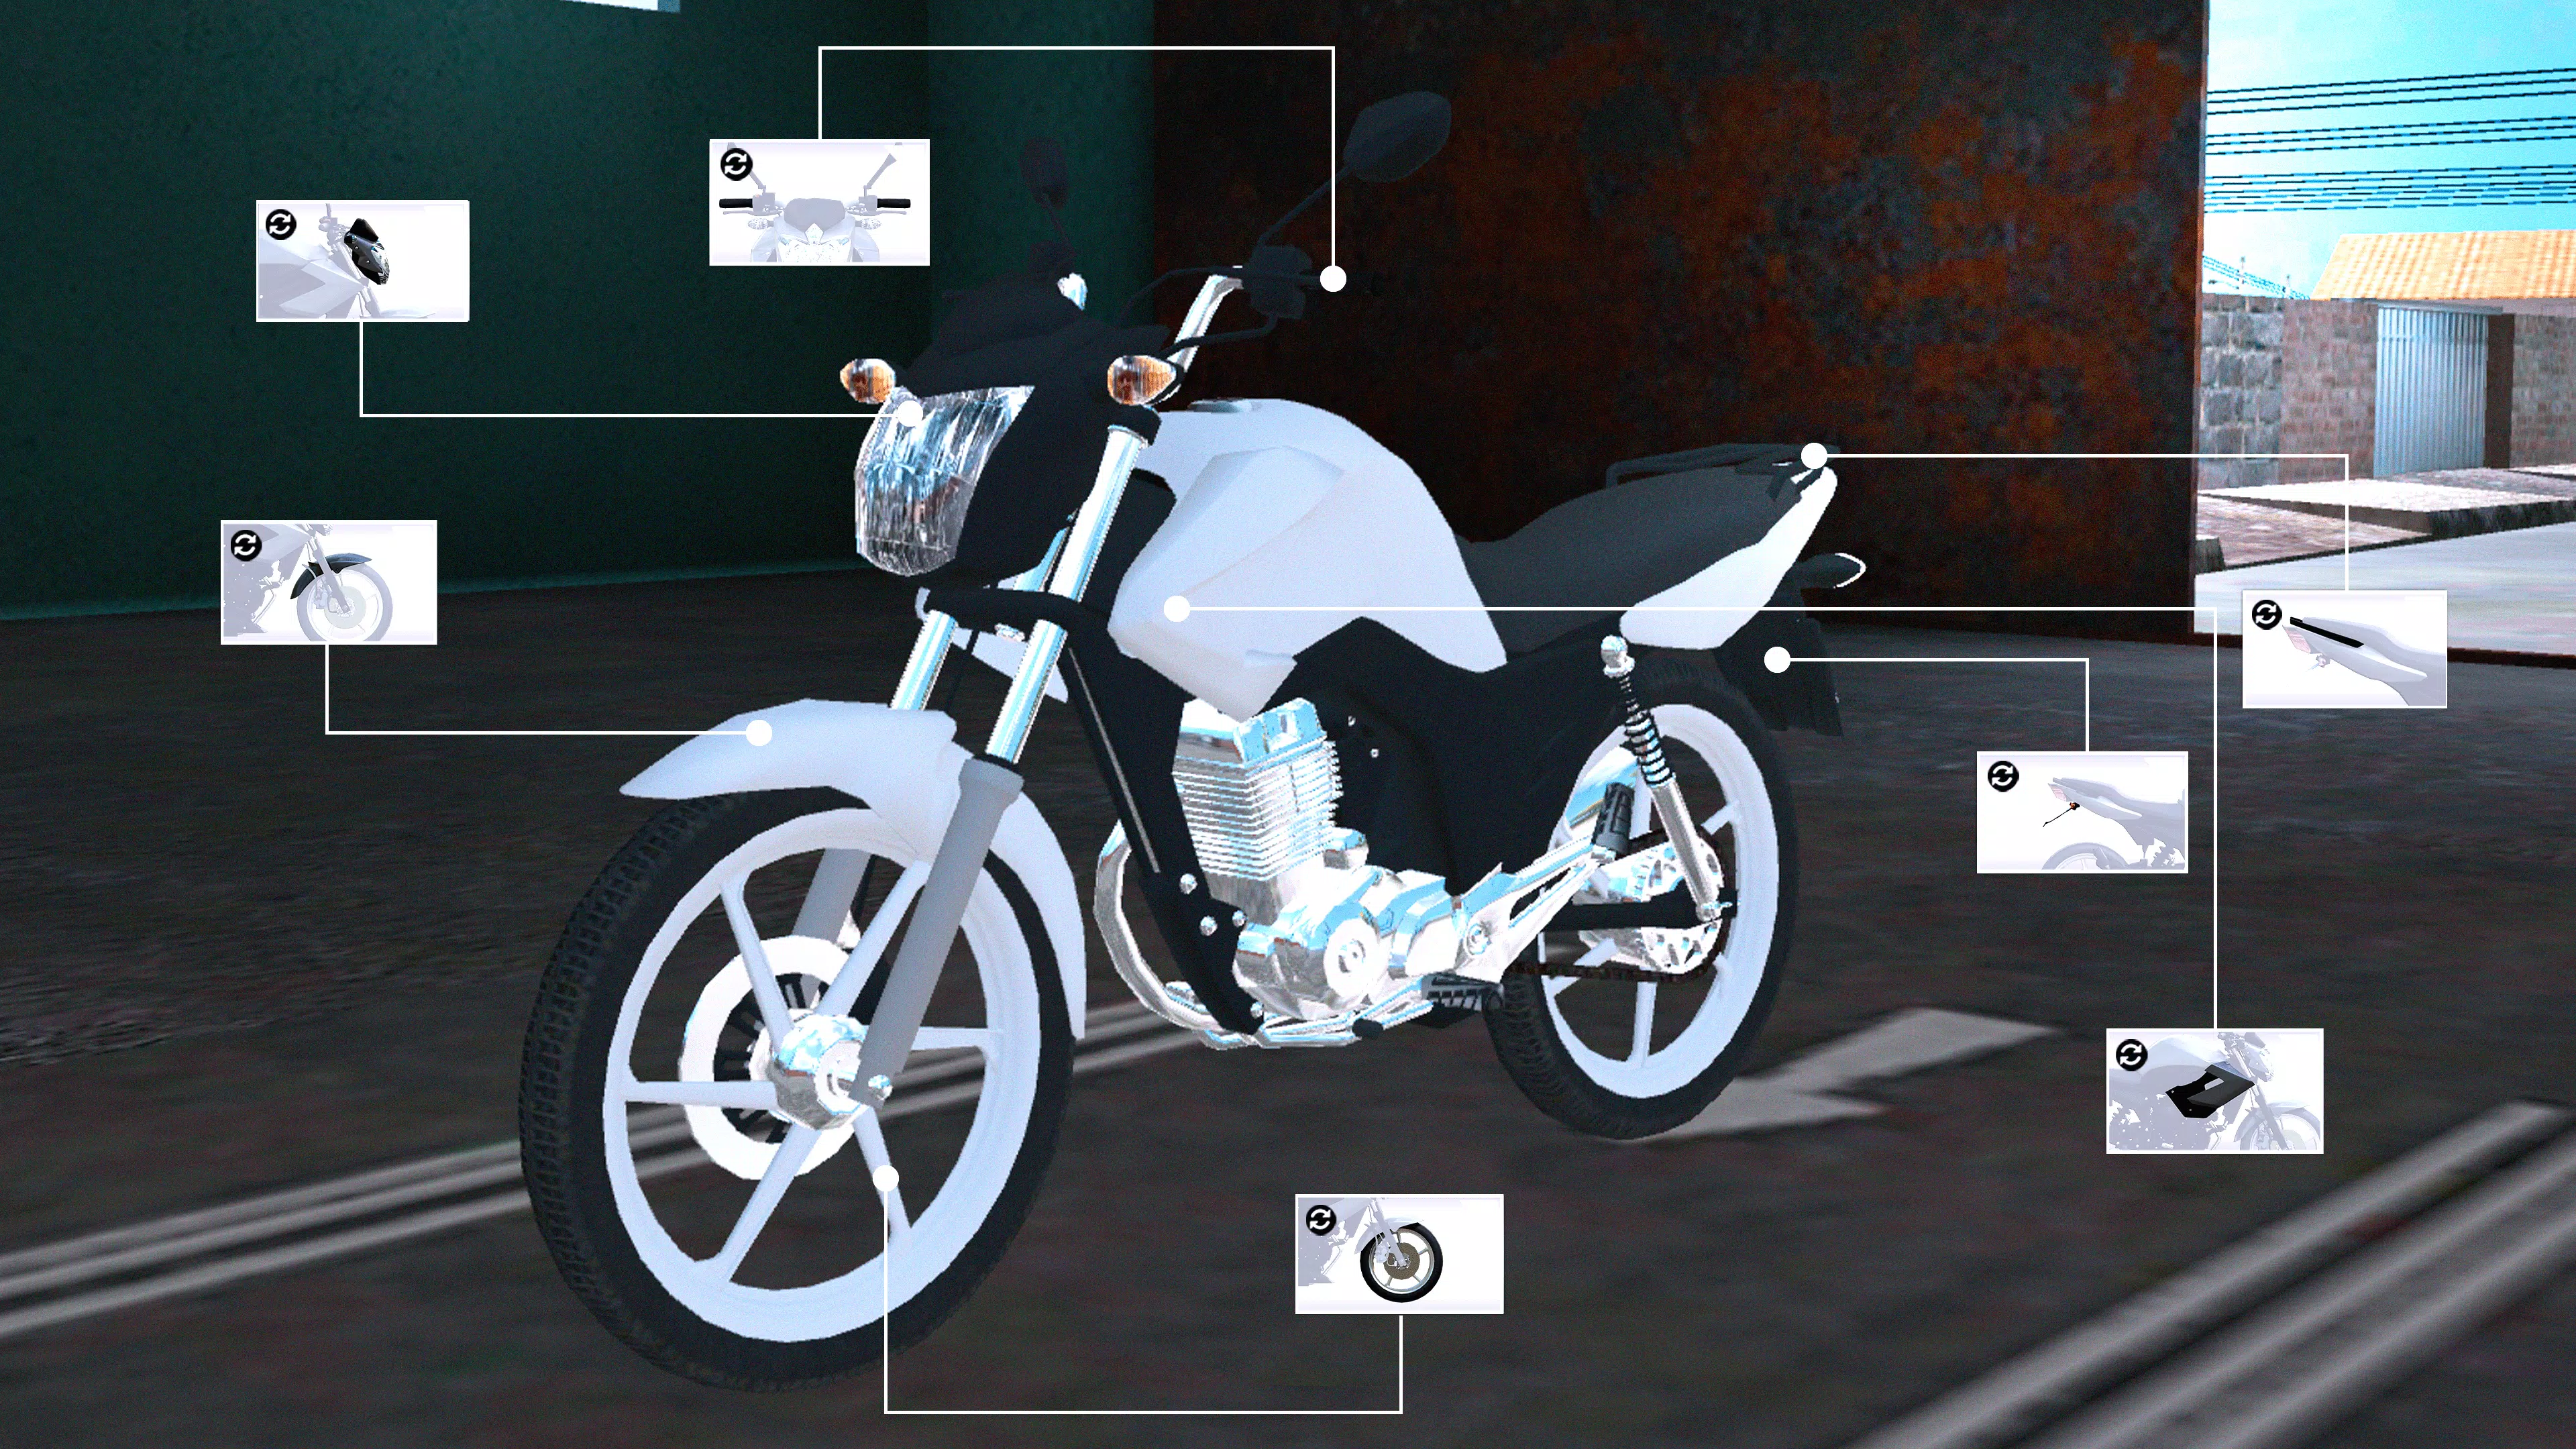 GTA motovlog para android 2023 Download Motos e Carros BR - W Top Games